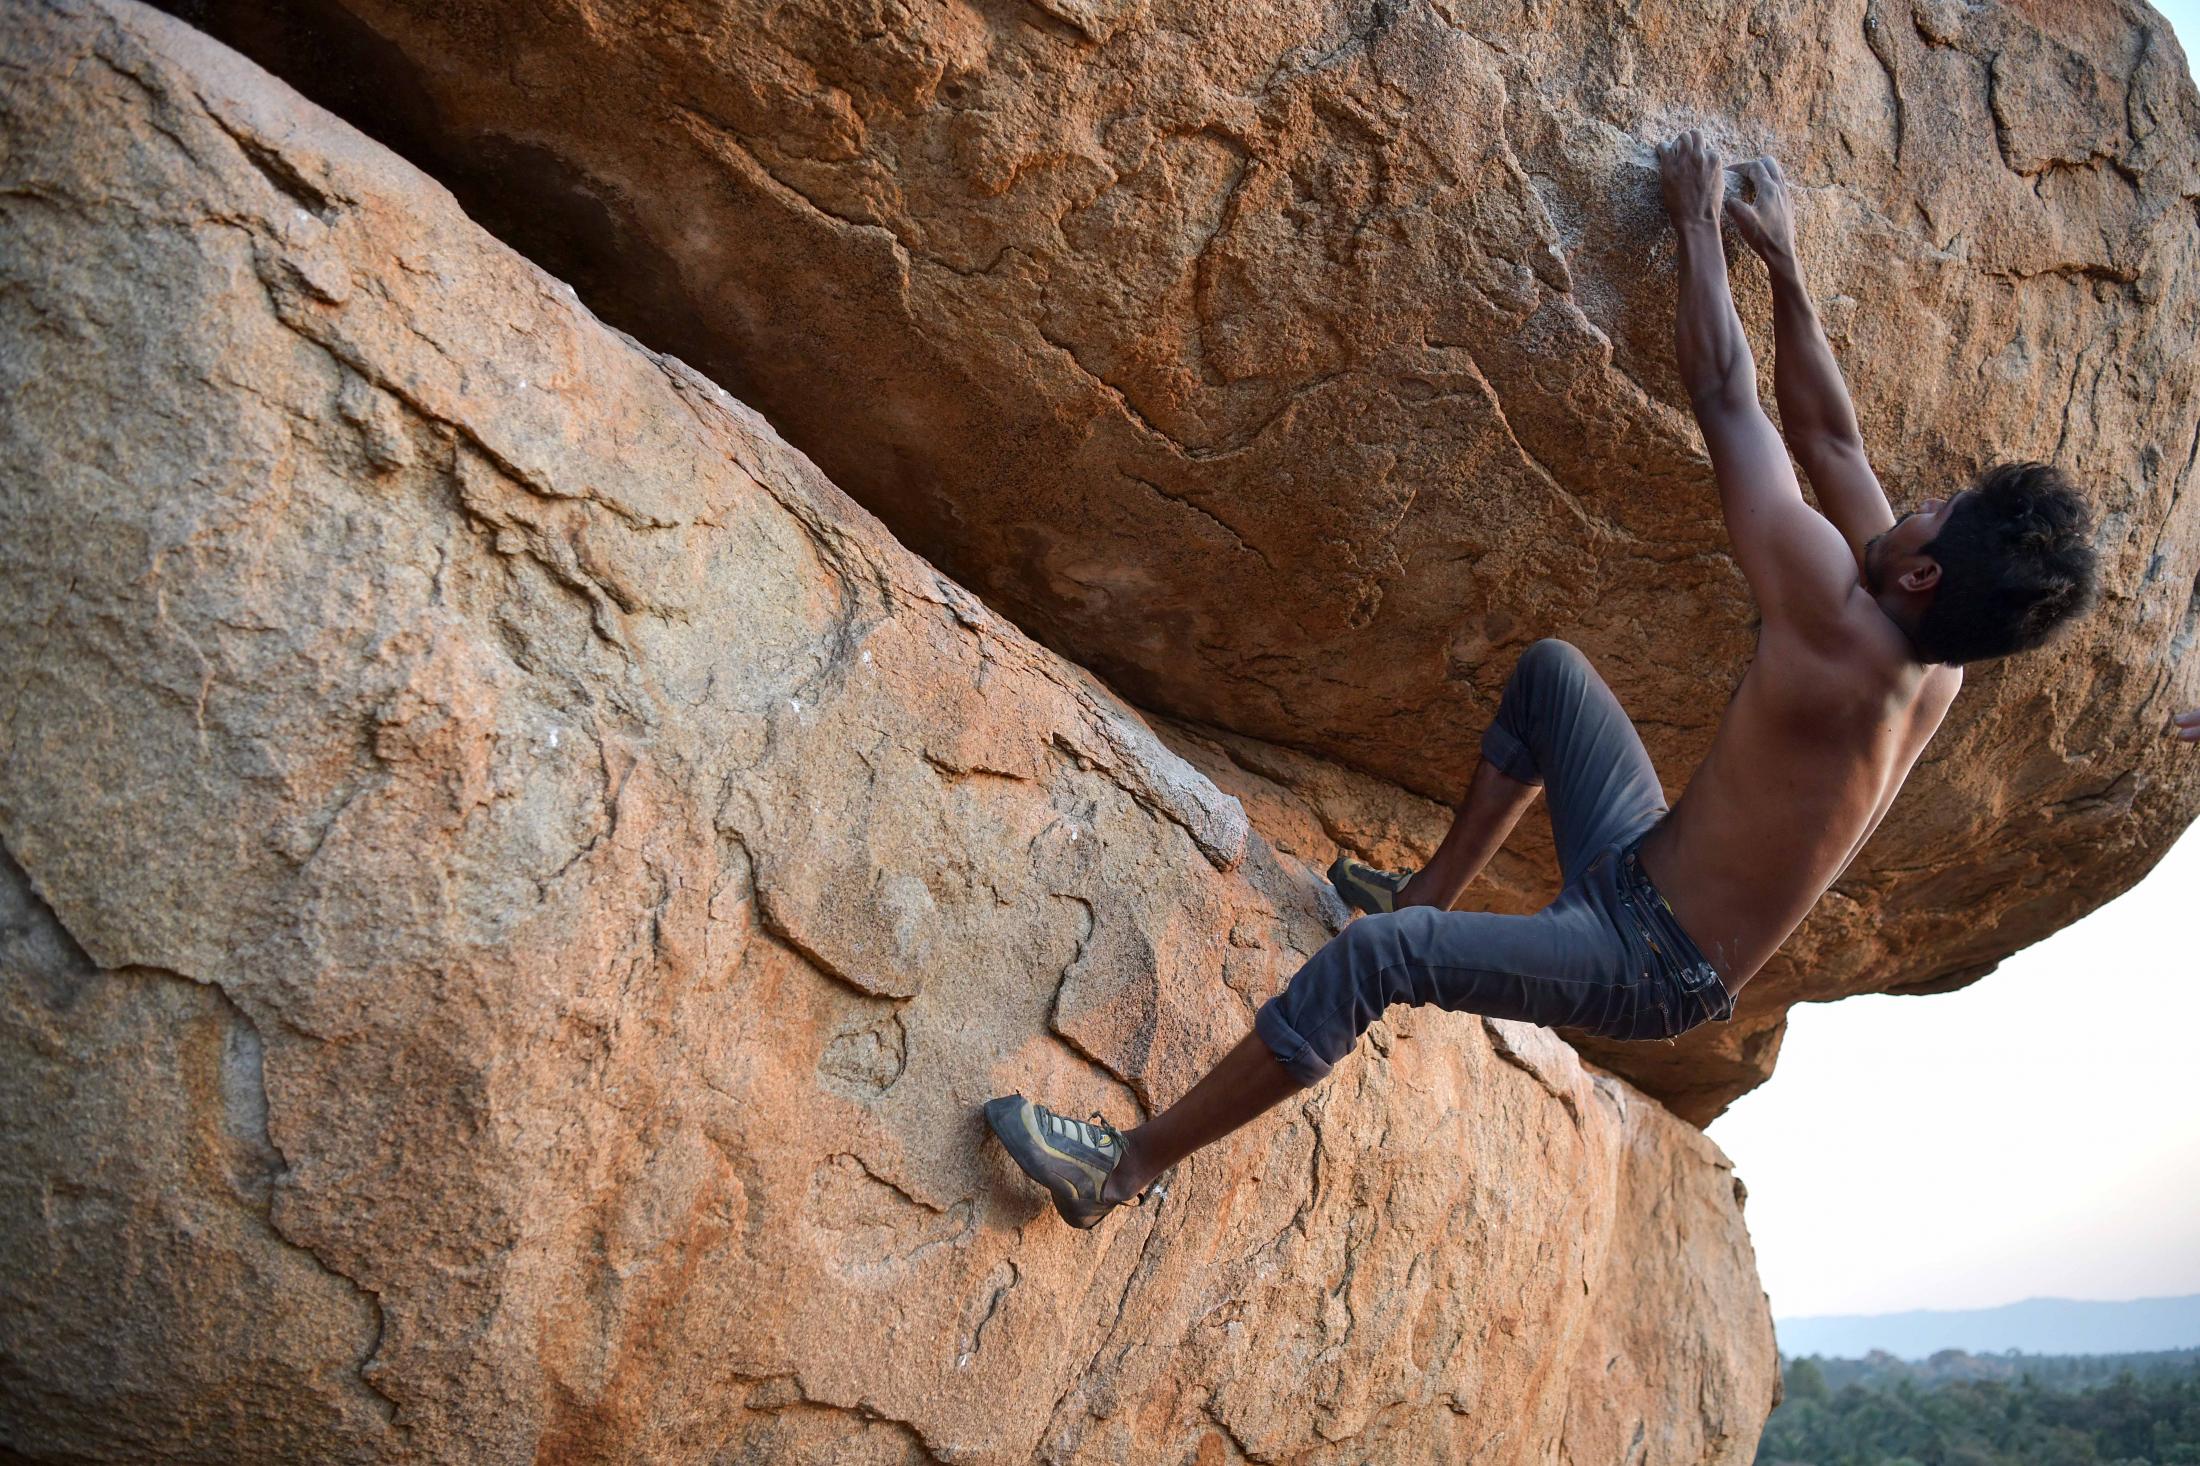 Life on the rocks - Parashuram is a Hampi- based athlete who found the rocks...